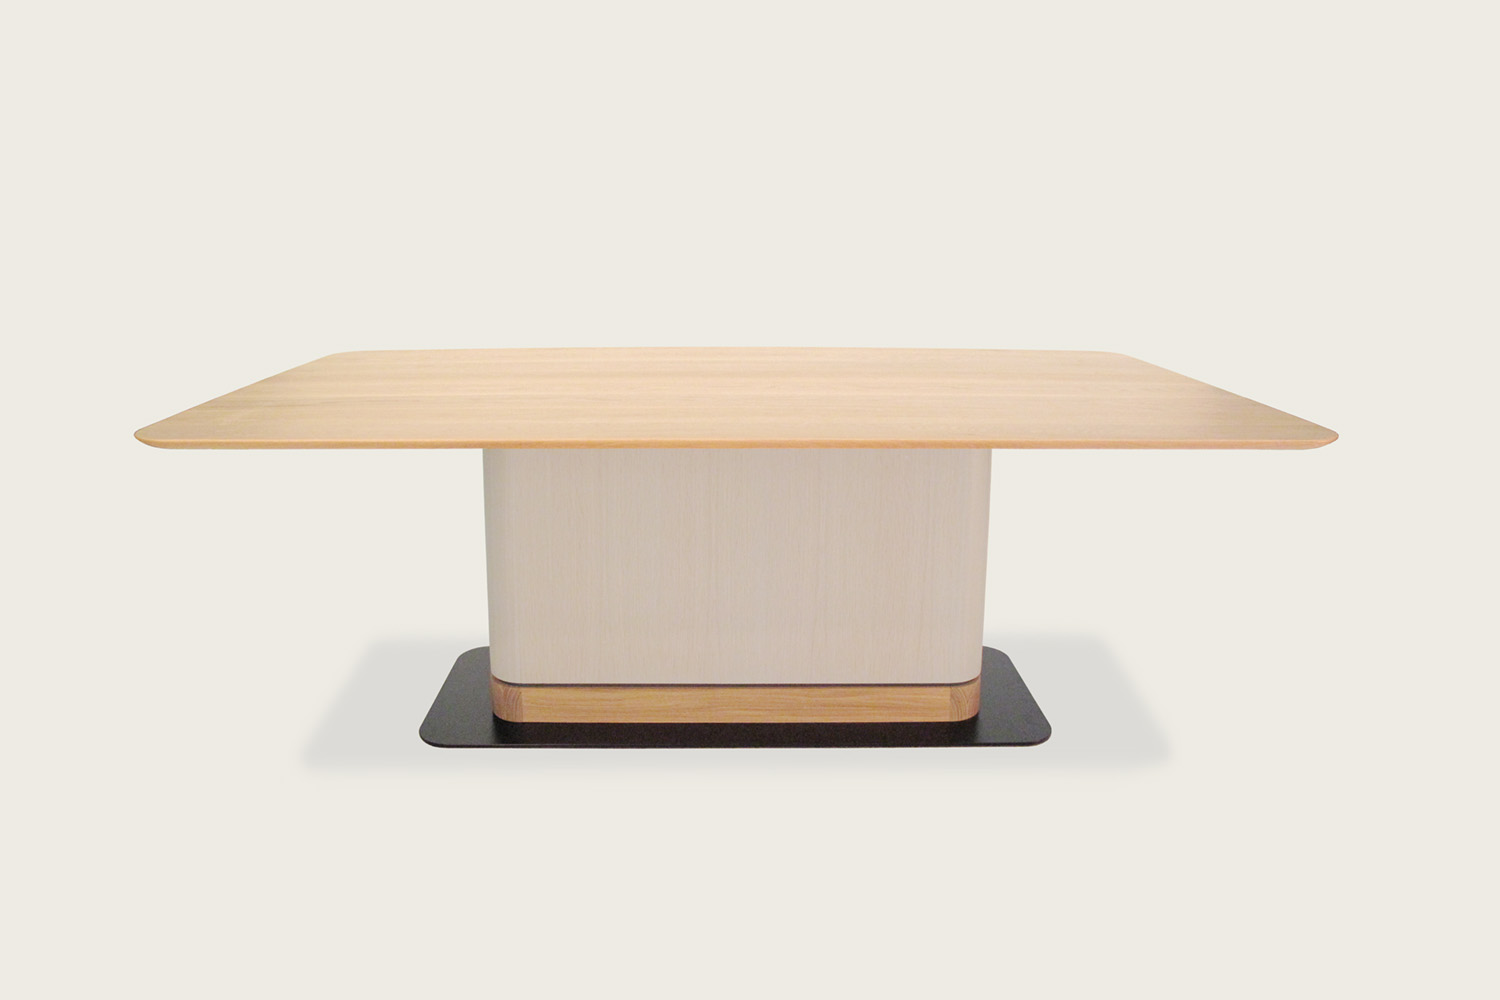 Speke Klein - Contour Pedestal Table in oak